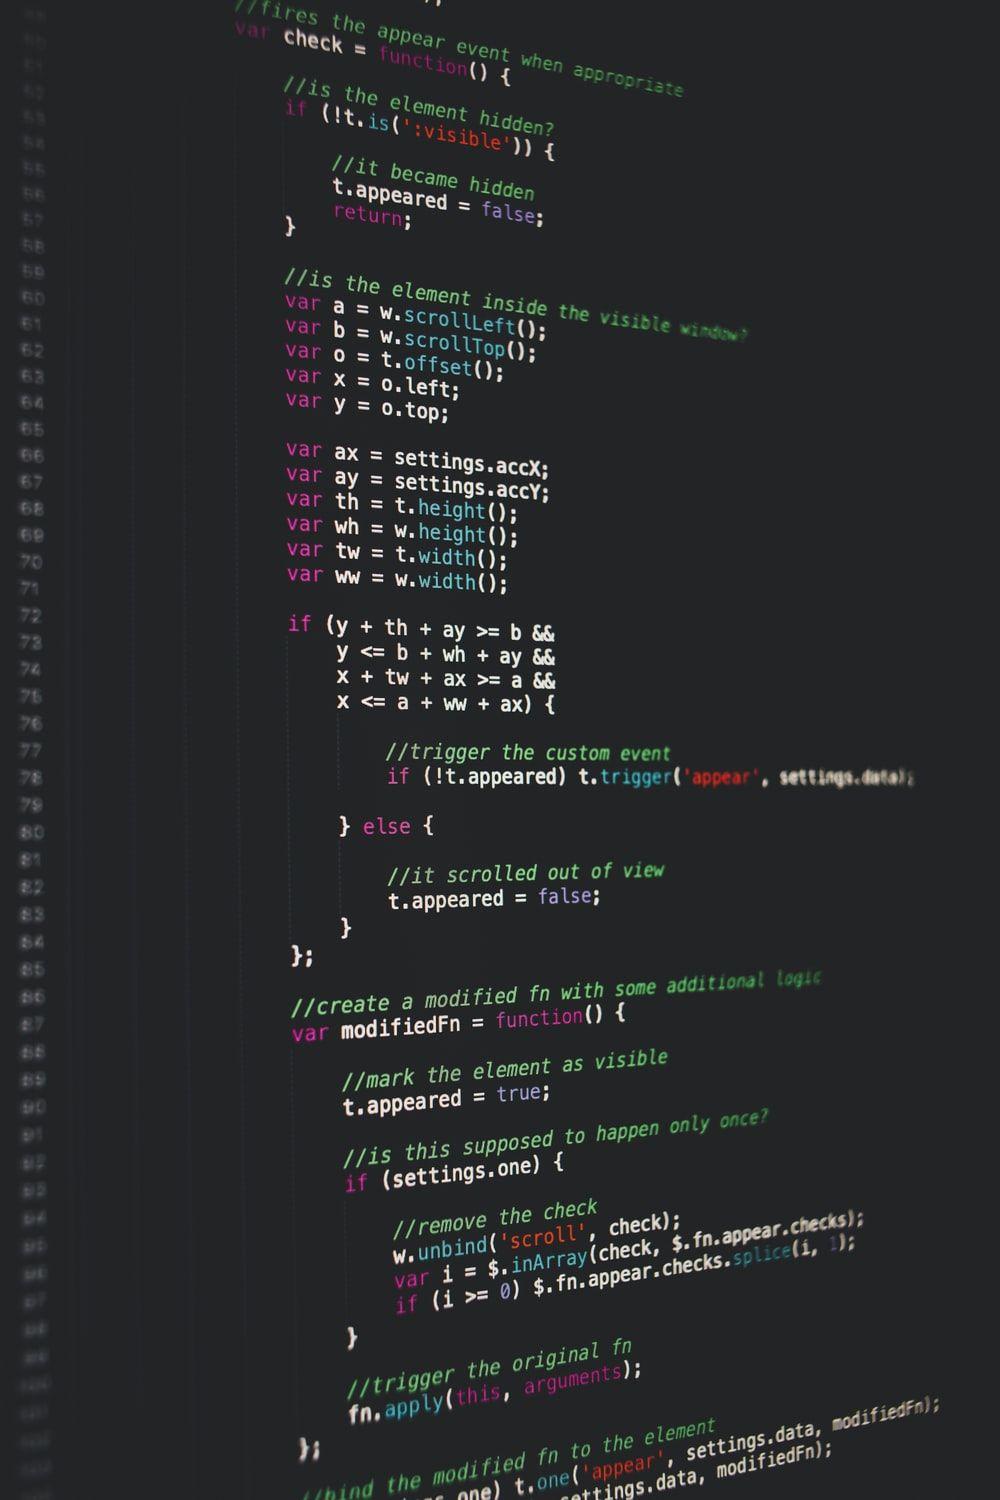 Programmer wallpaper by DevilWine - Download on ZEDGE™